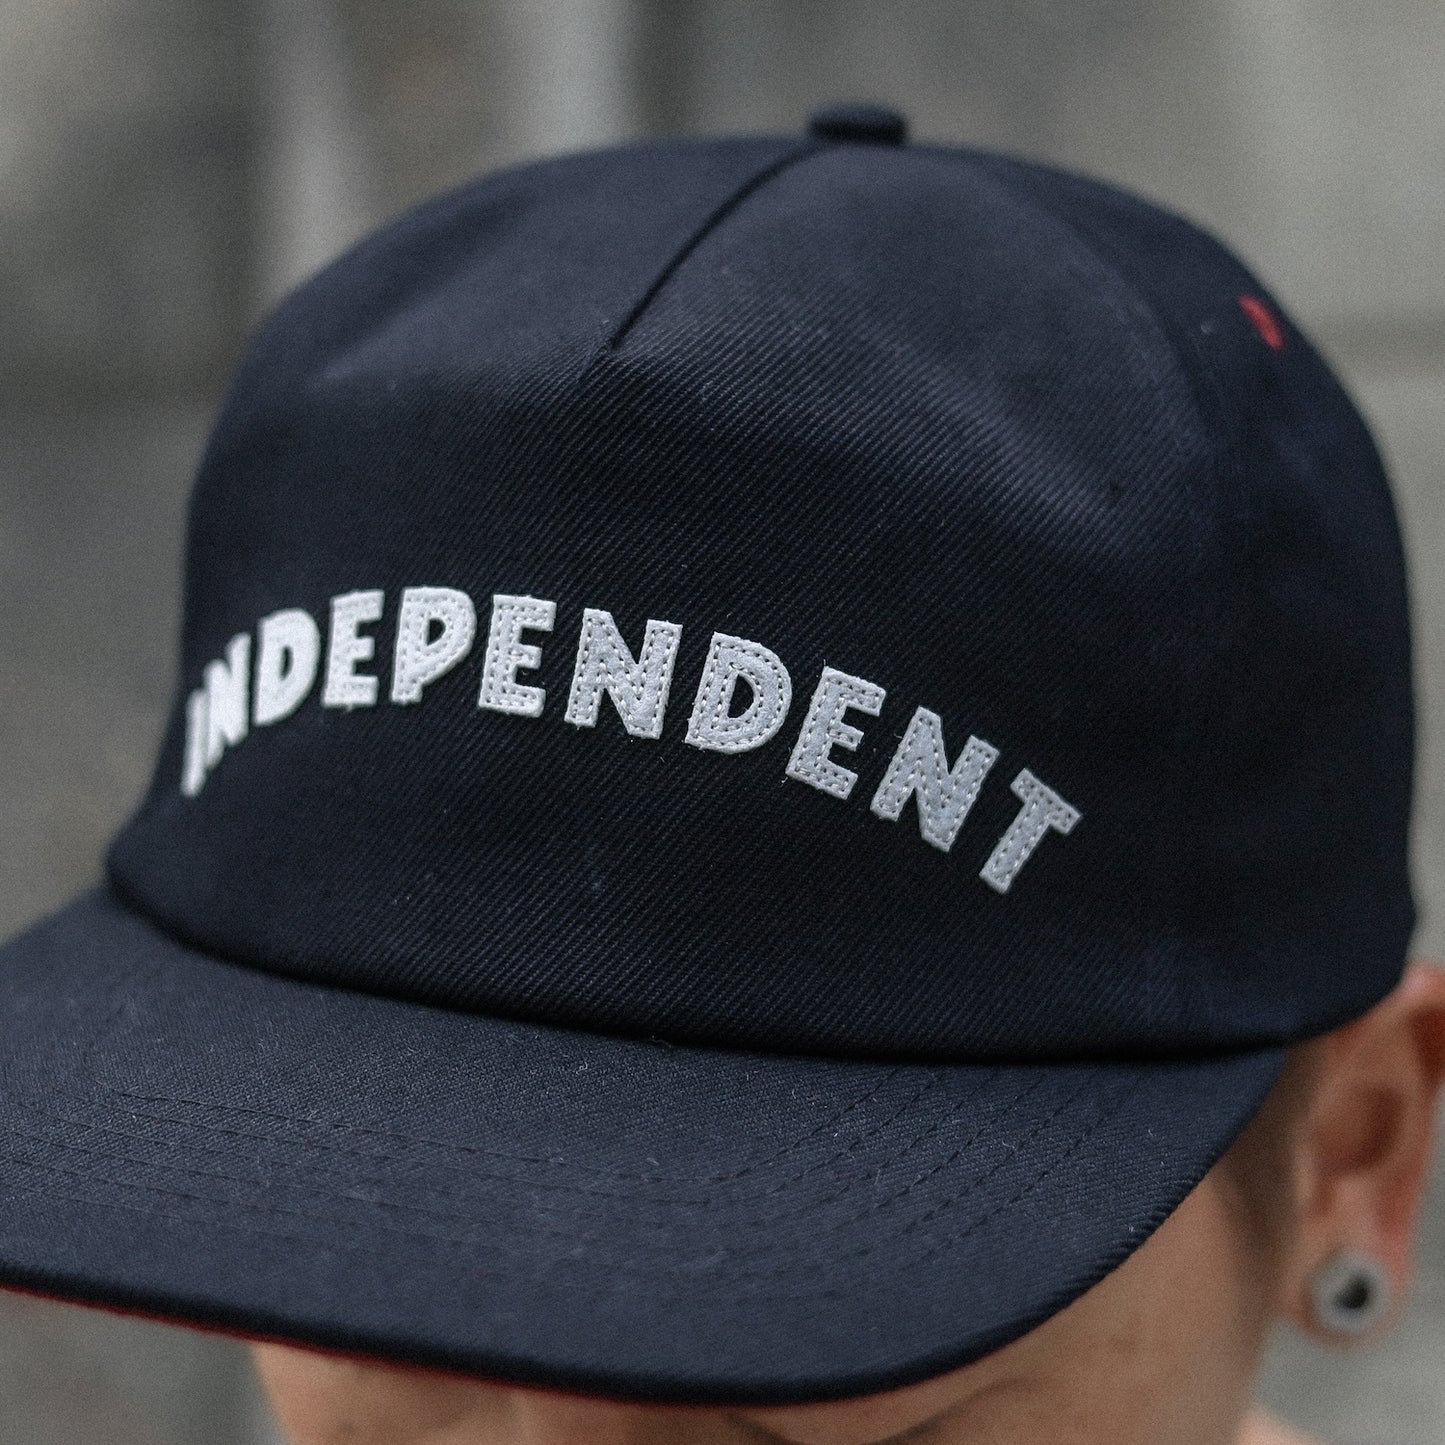 INDEPENDENT / BRIGADE STRAPBACK HAT (BLACK)